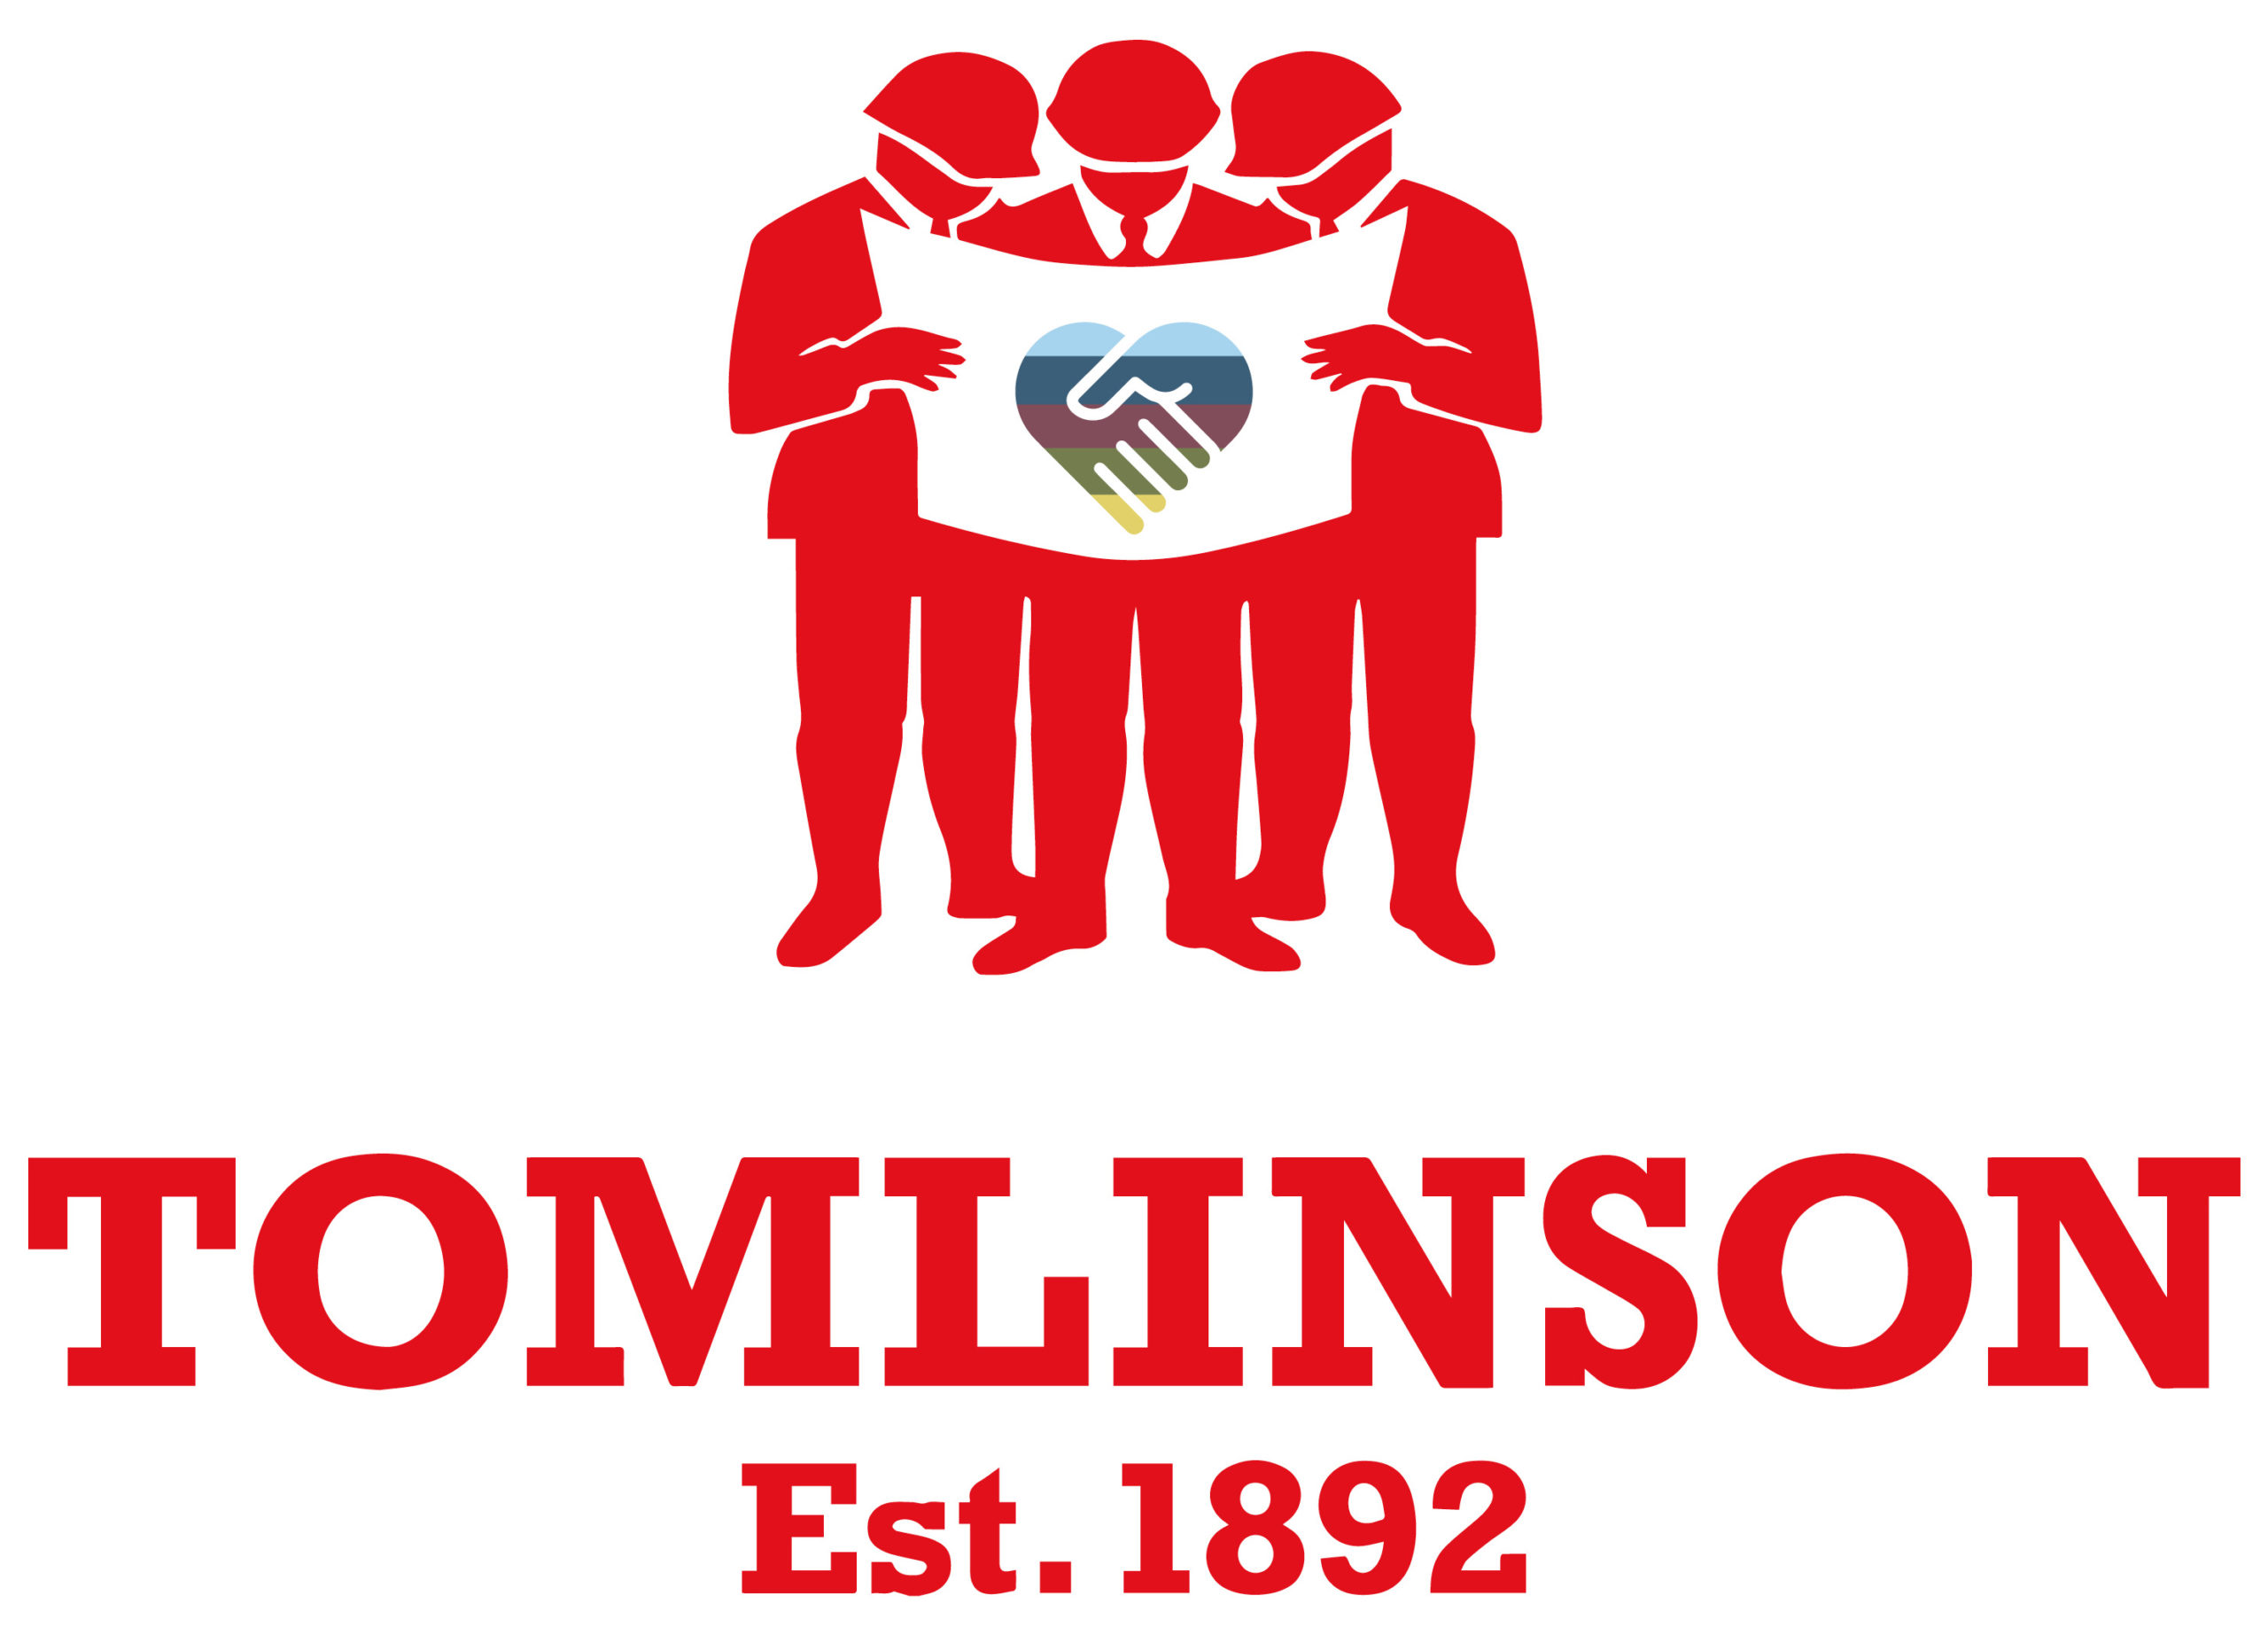 G F Tomlinson launches pro bono Local Communities Partnership Programme